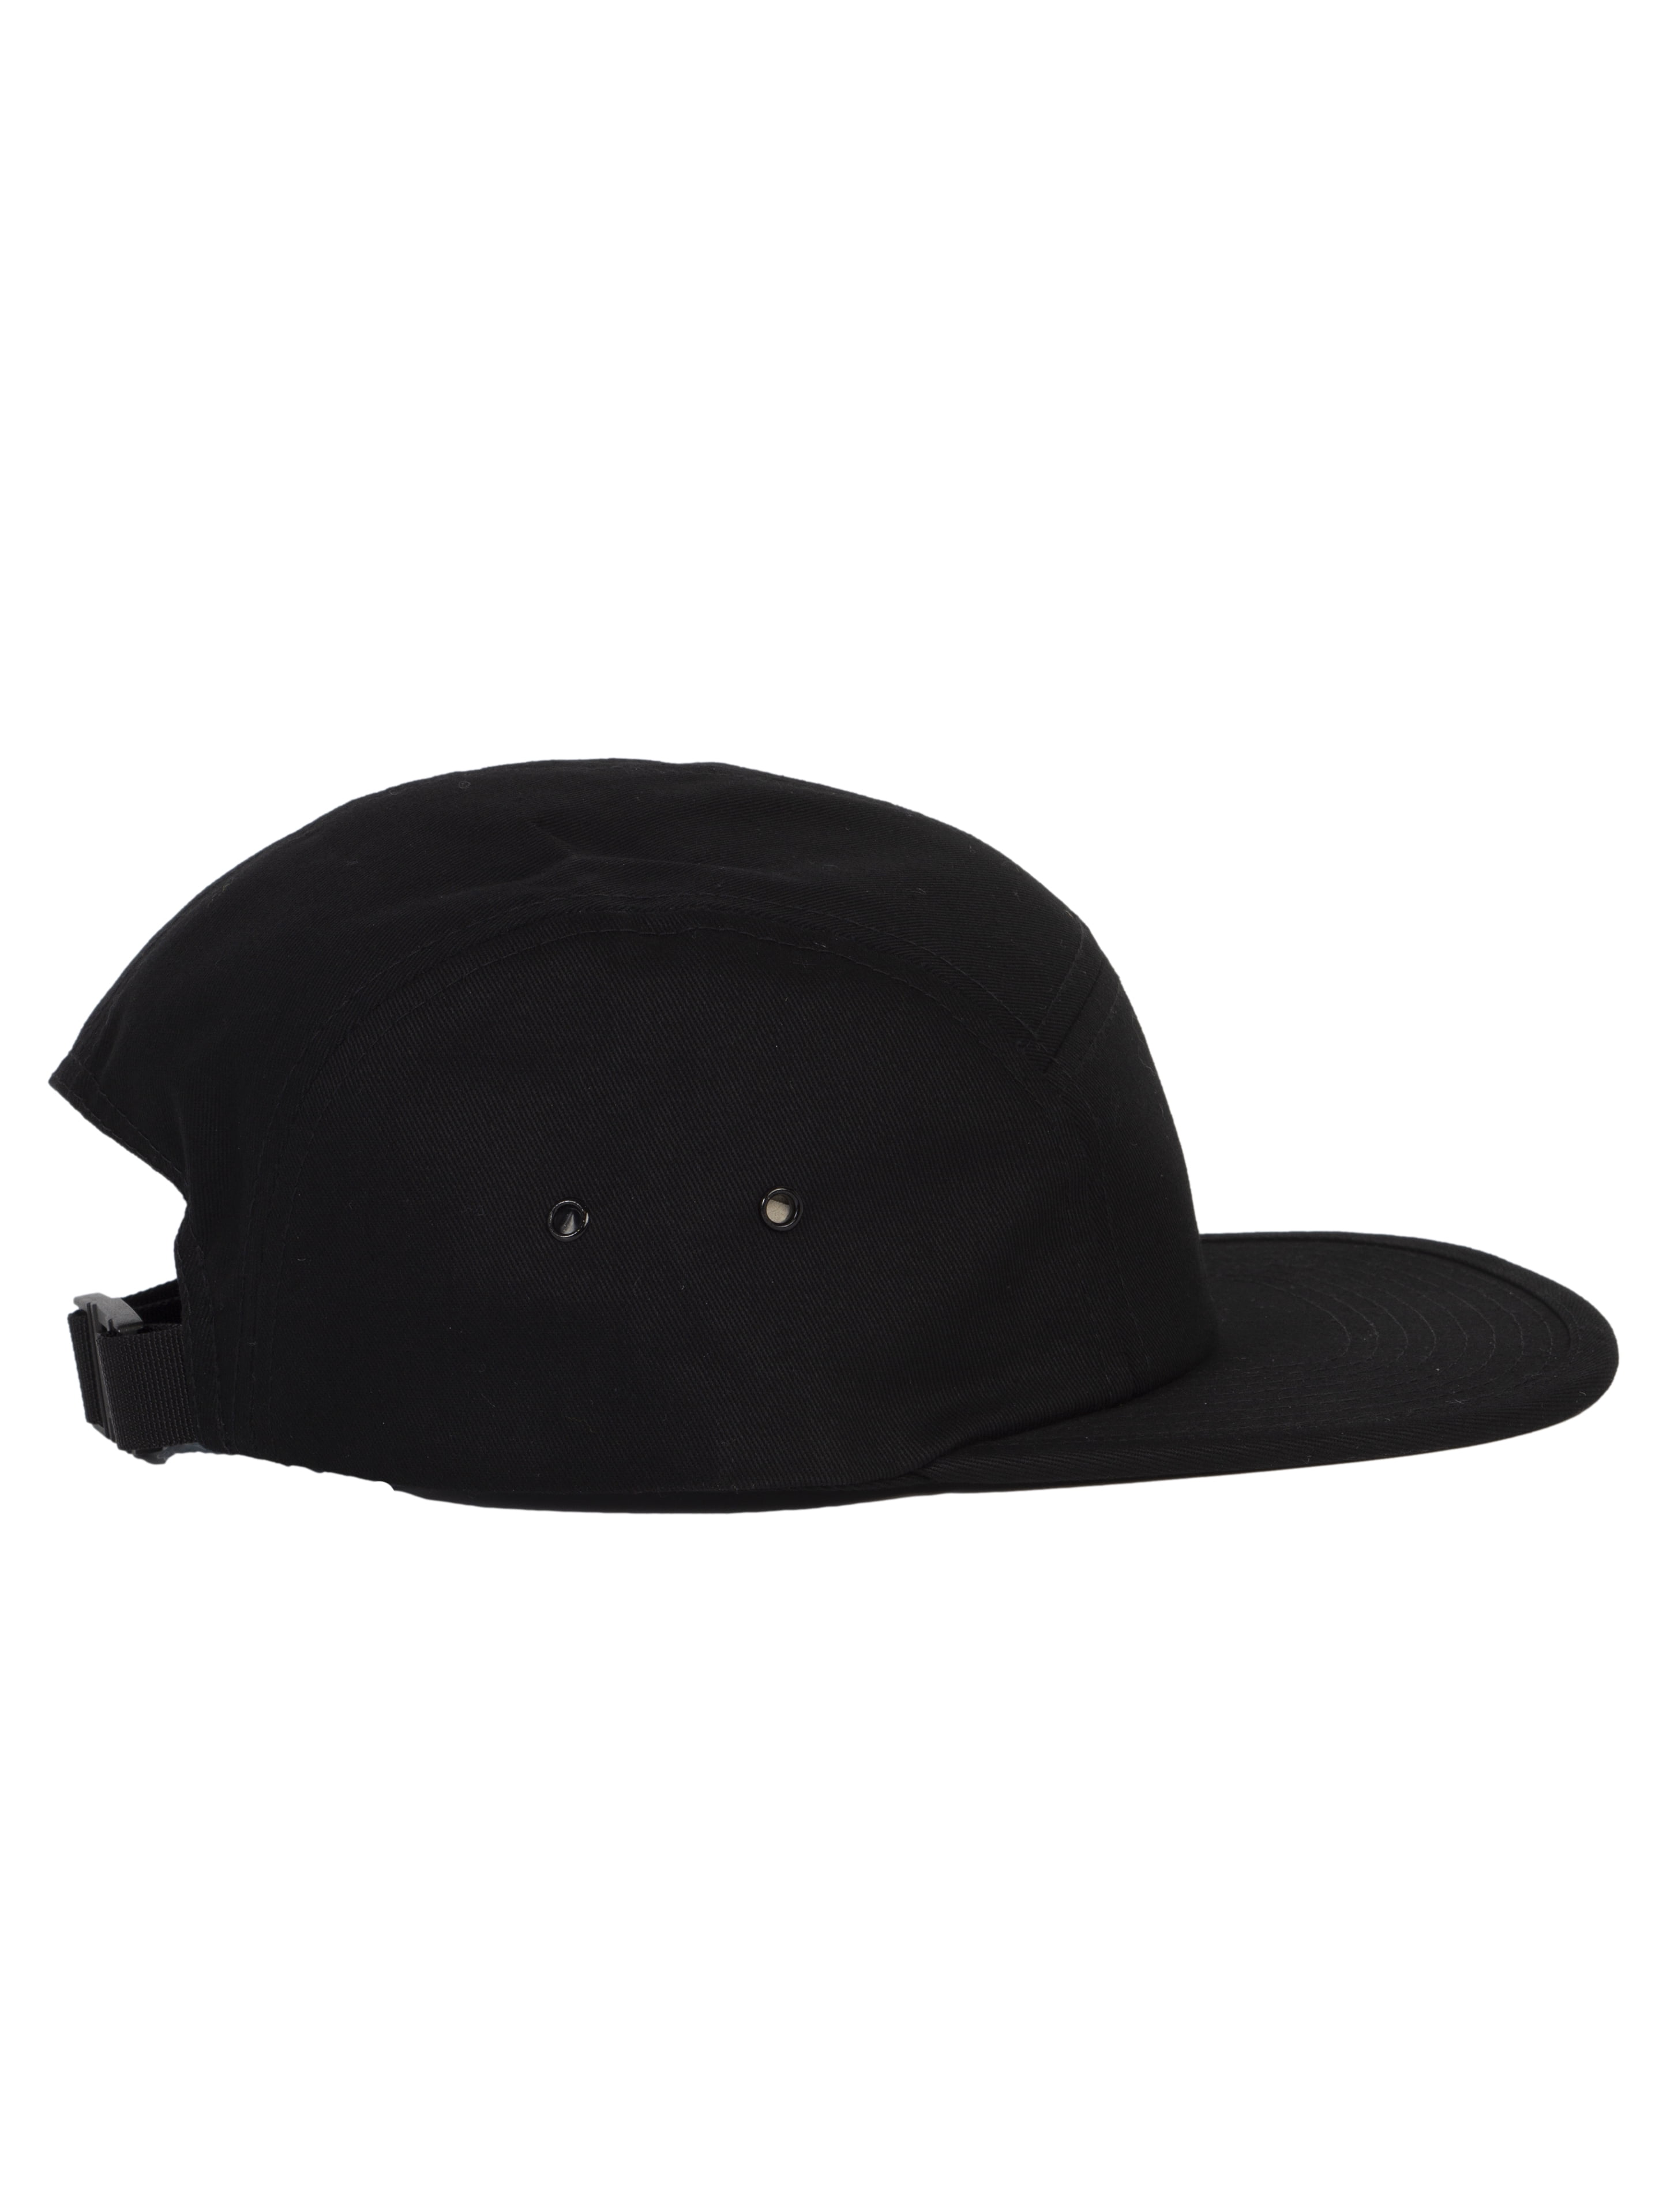 Top Headwear 5 Panel Hat For Men Classic Flat Bill Jockey Baseball Cap Black